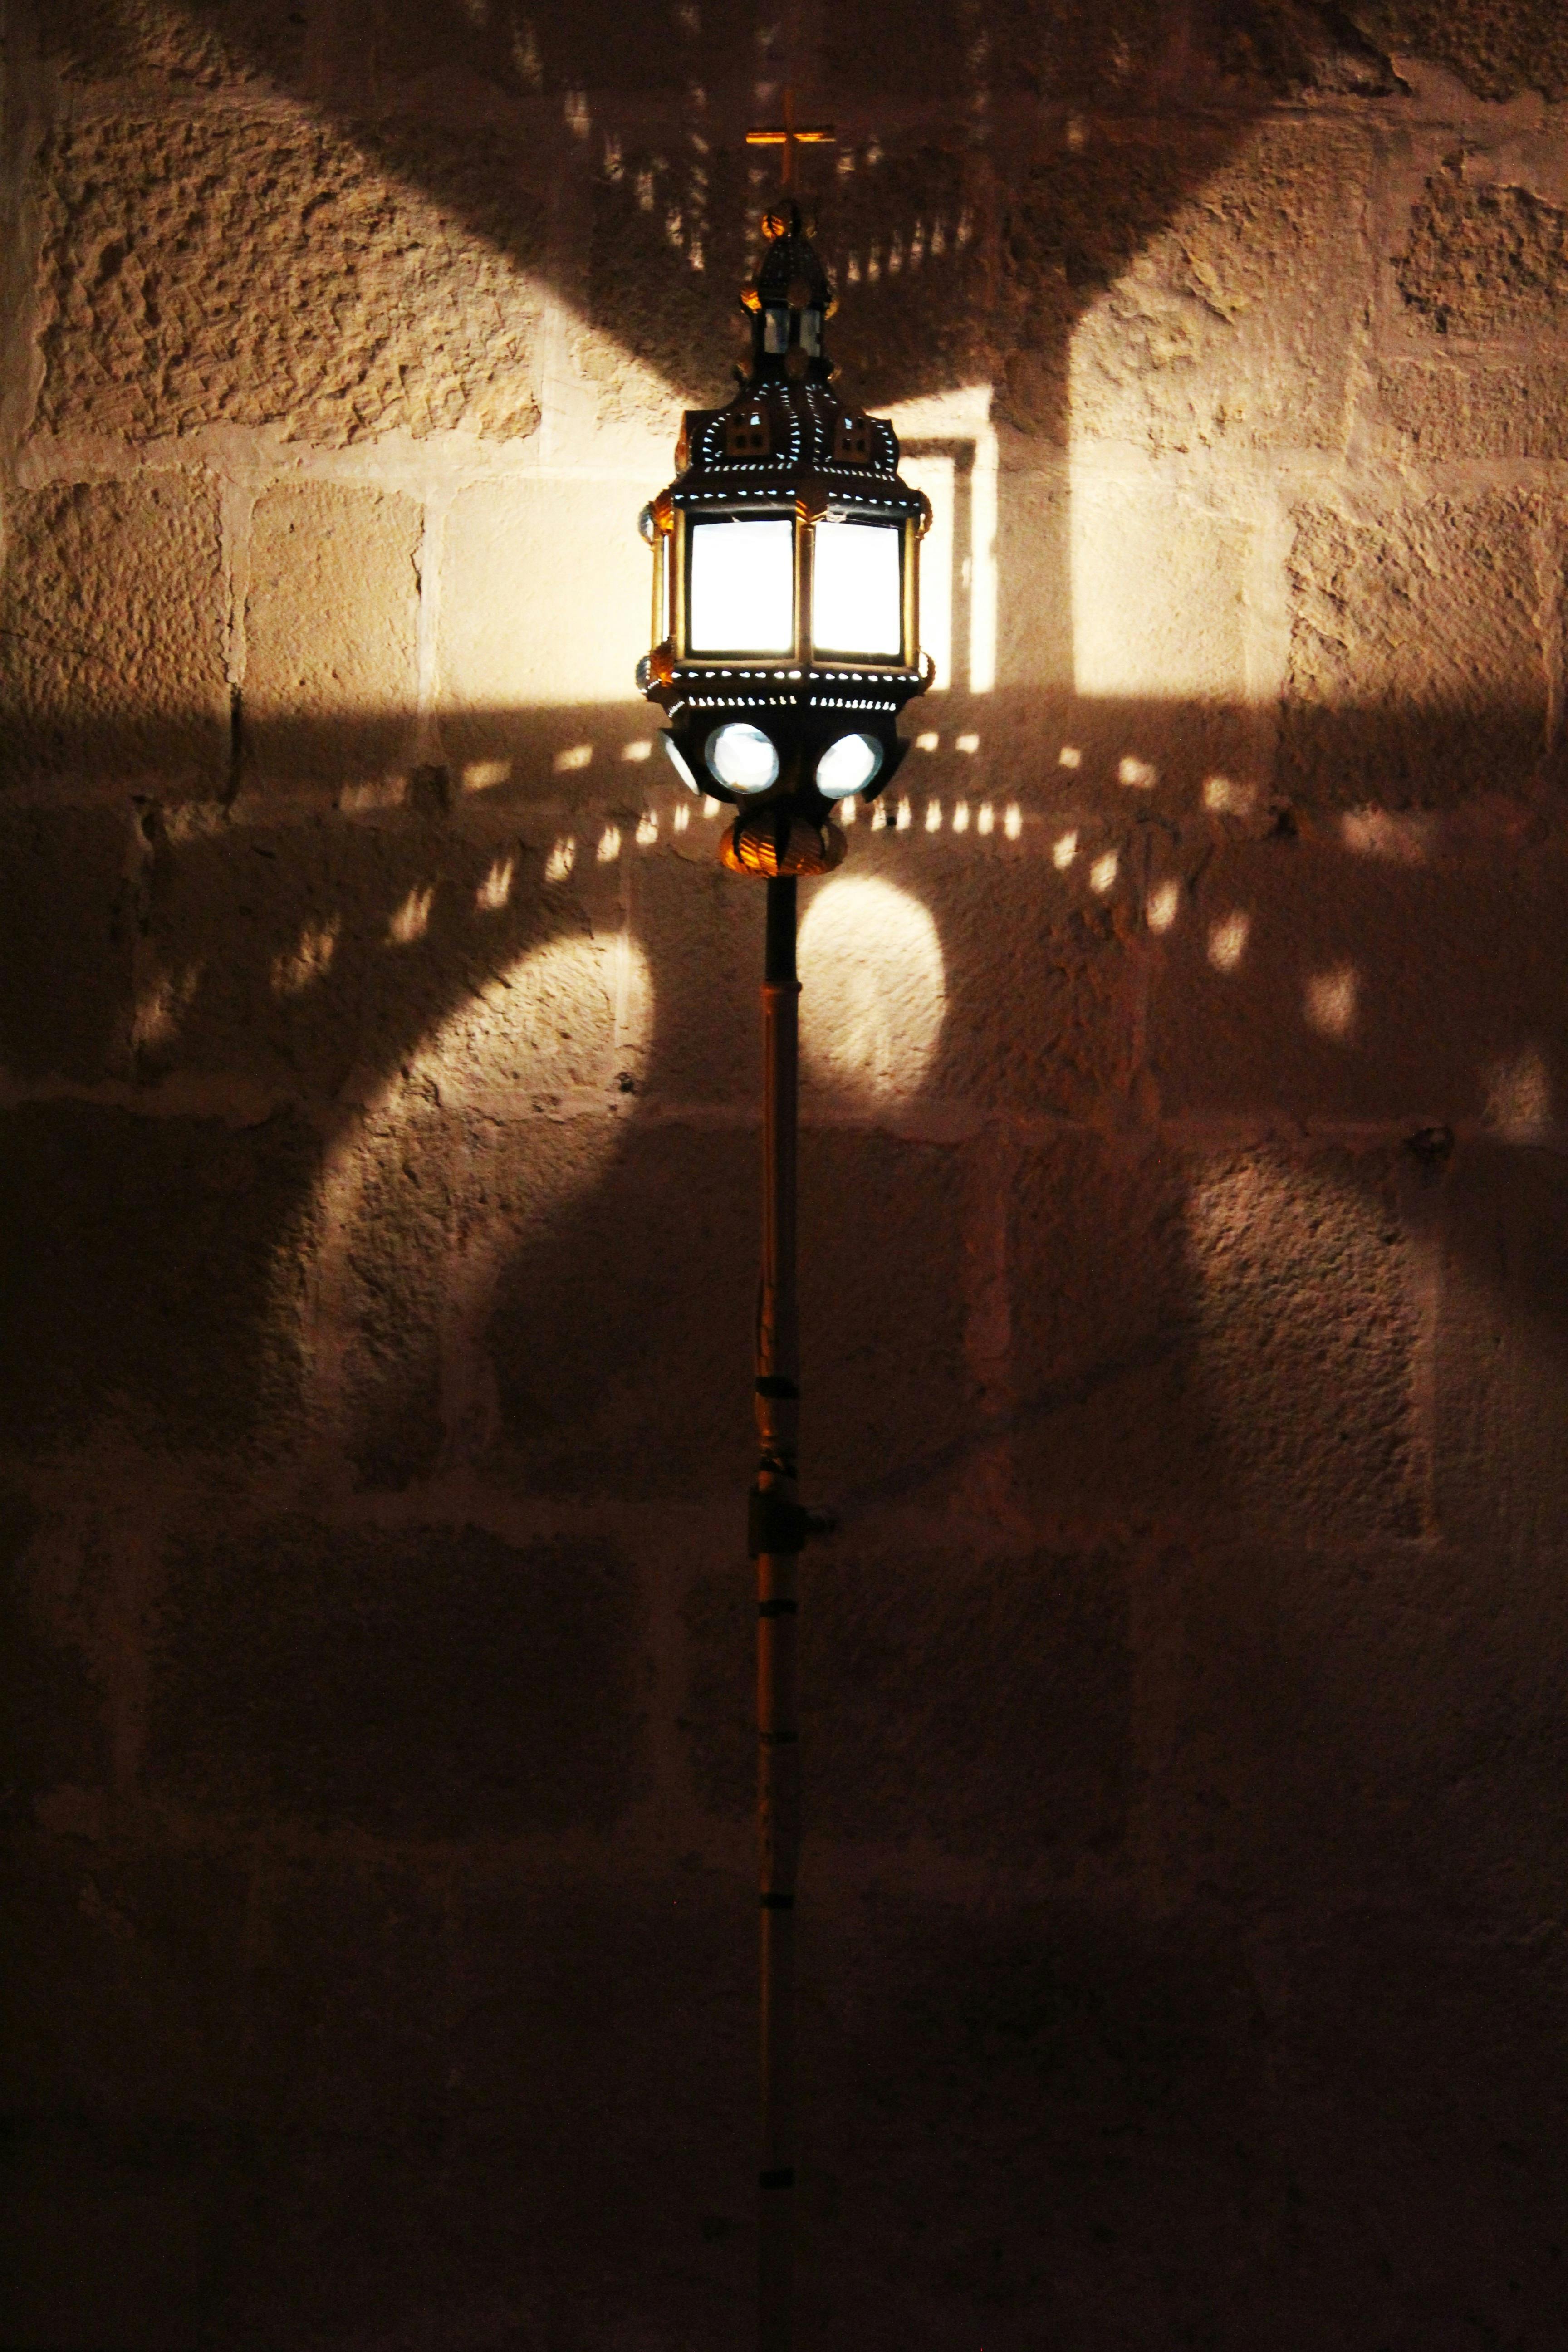 Free stock photo of cathar lamp, lamp, light and shade